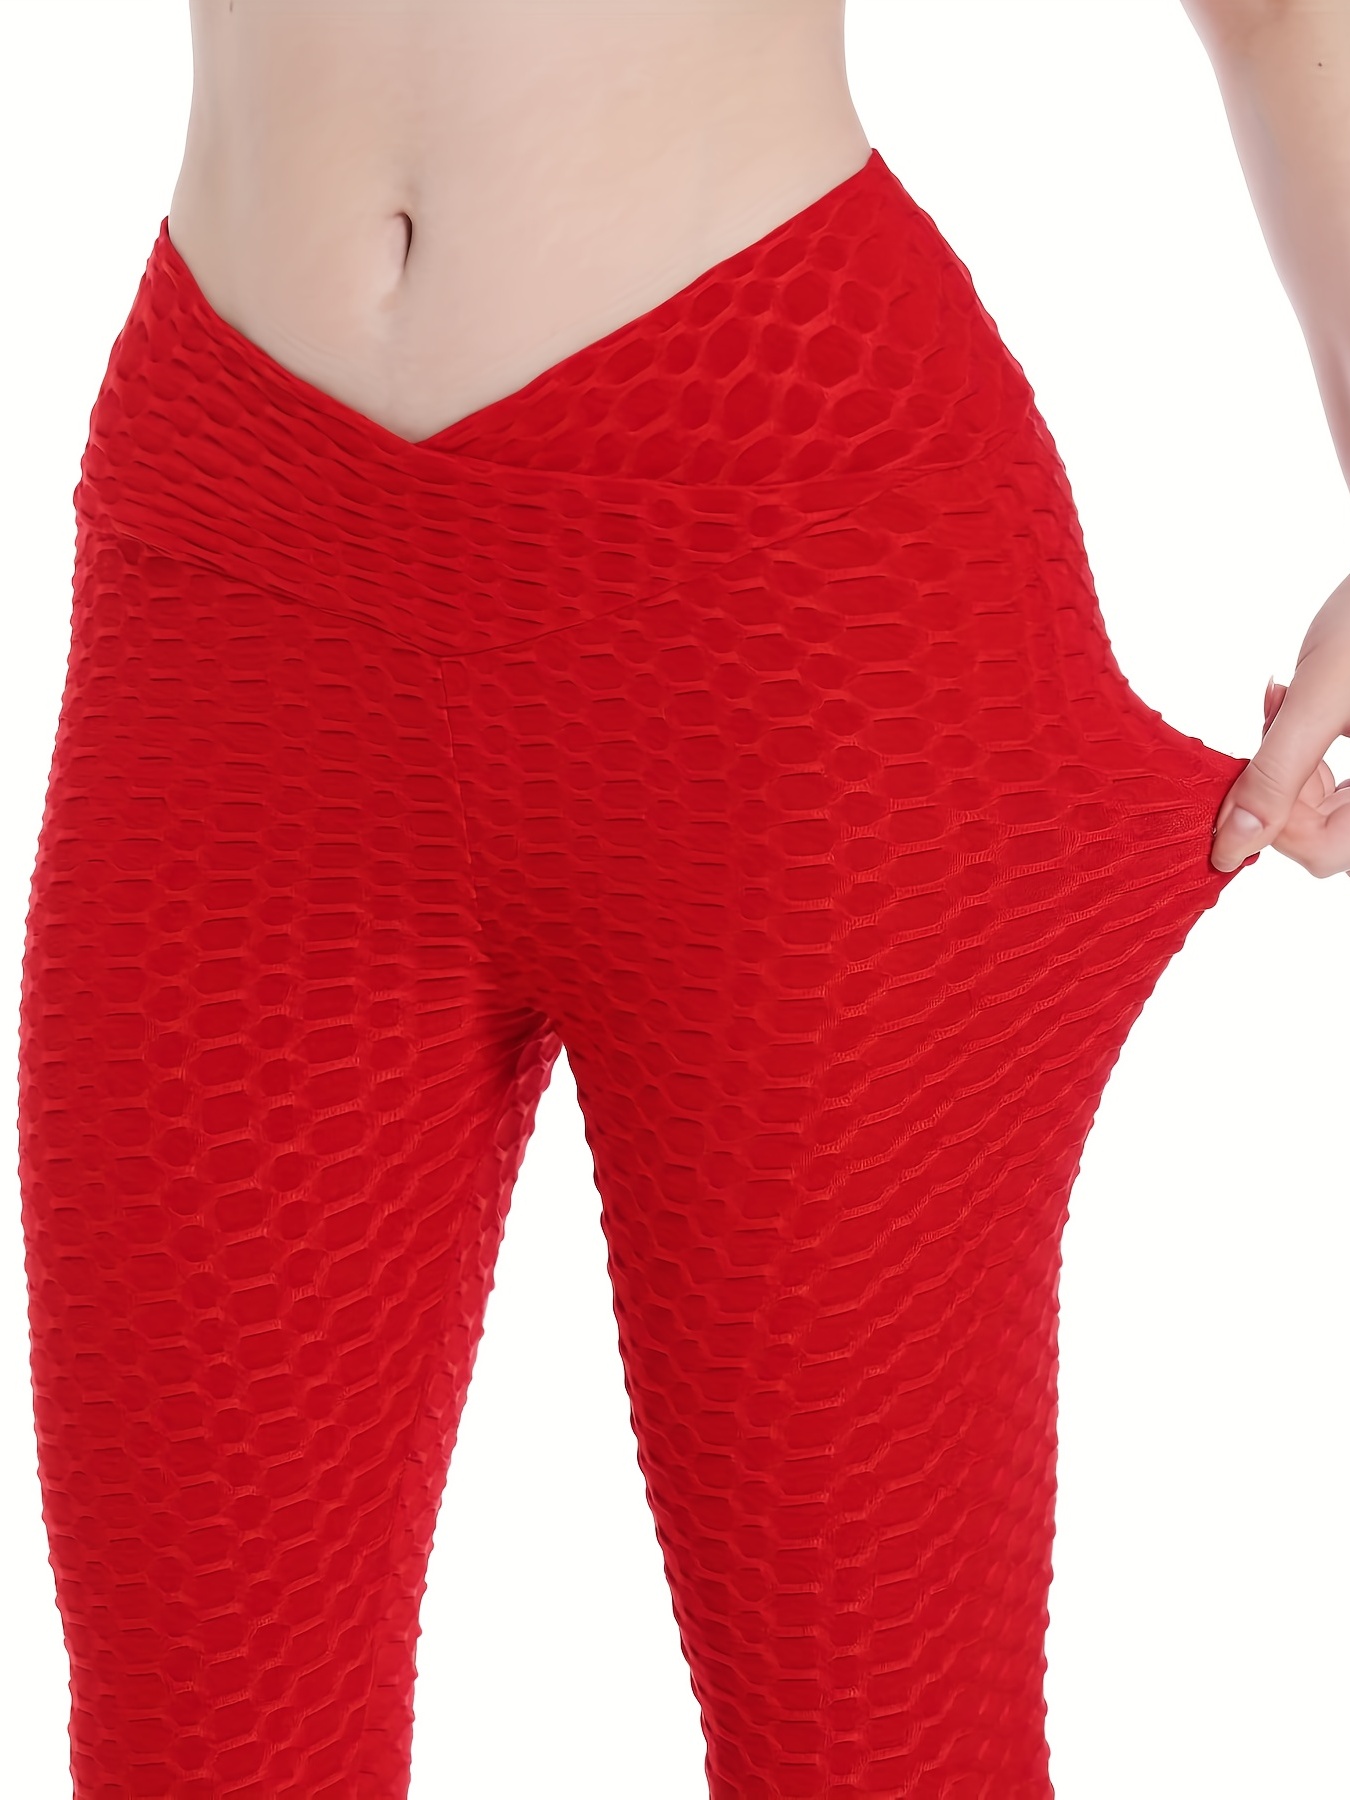 Pantalones de yoga elásticos para mujer, calzas de entrenamiento de talle  alto cruzado con control de abdomen, no se transparentan, corte de bota